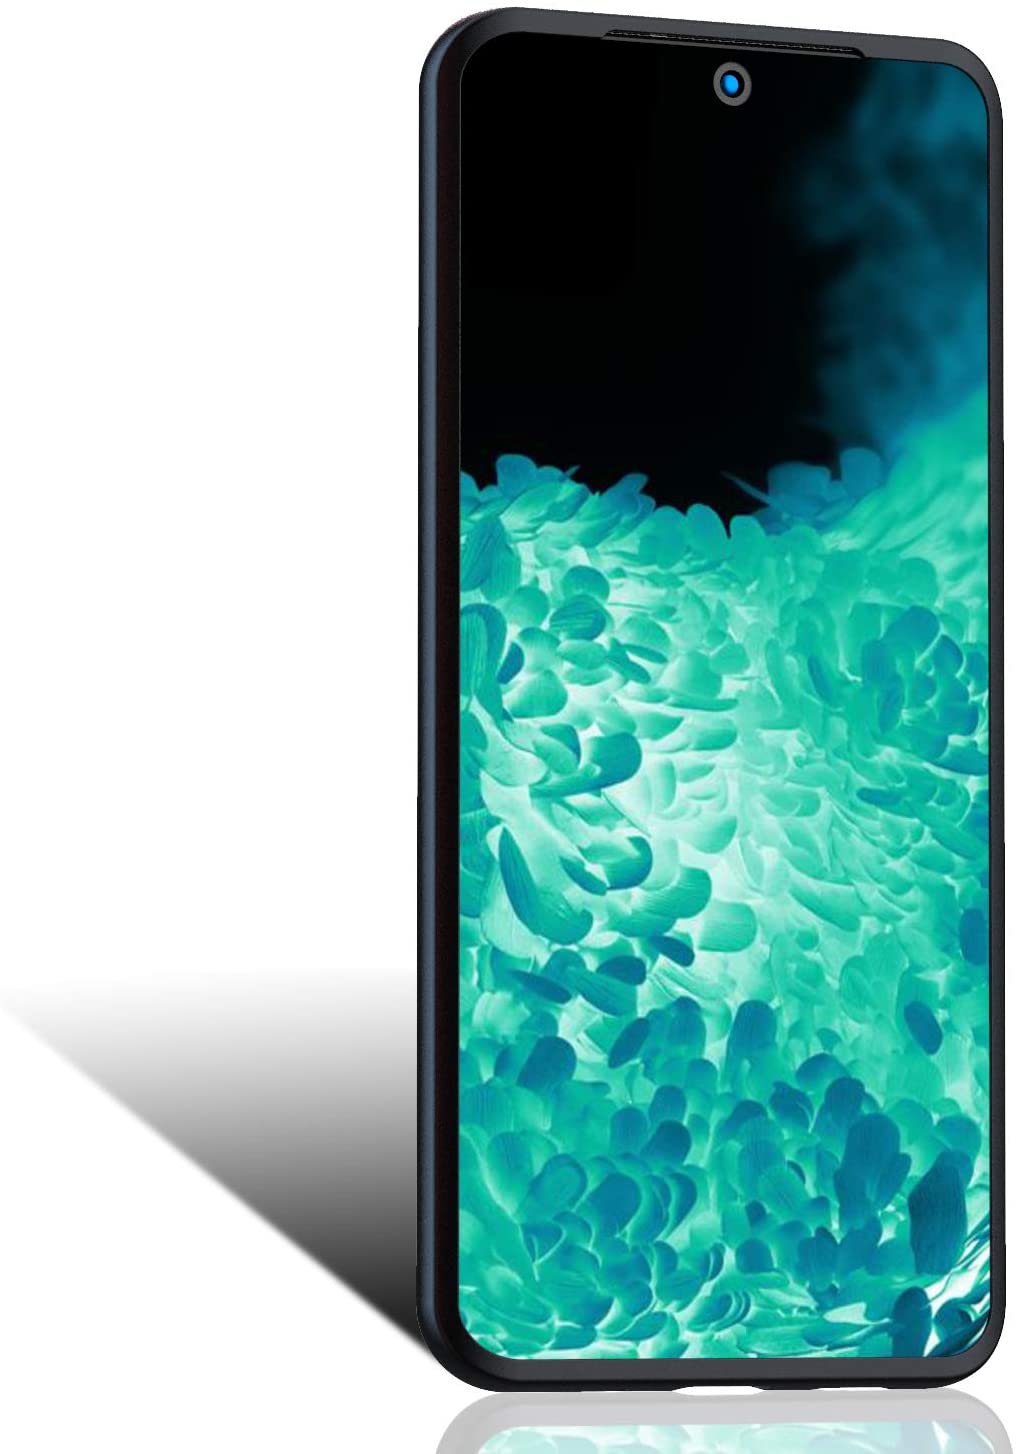 Samsung Galaxy S20 Plus Kitoo Carbon Fiber Pattern Case Rose Gold